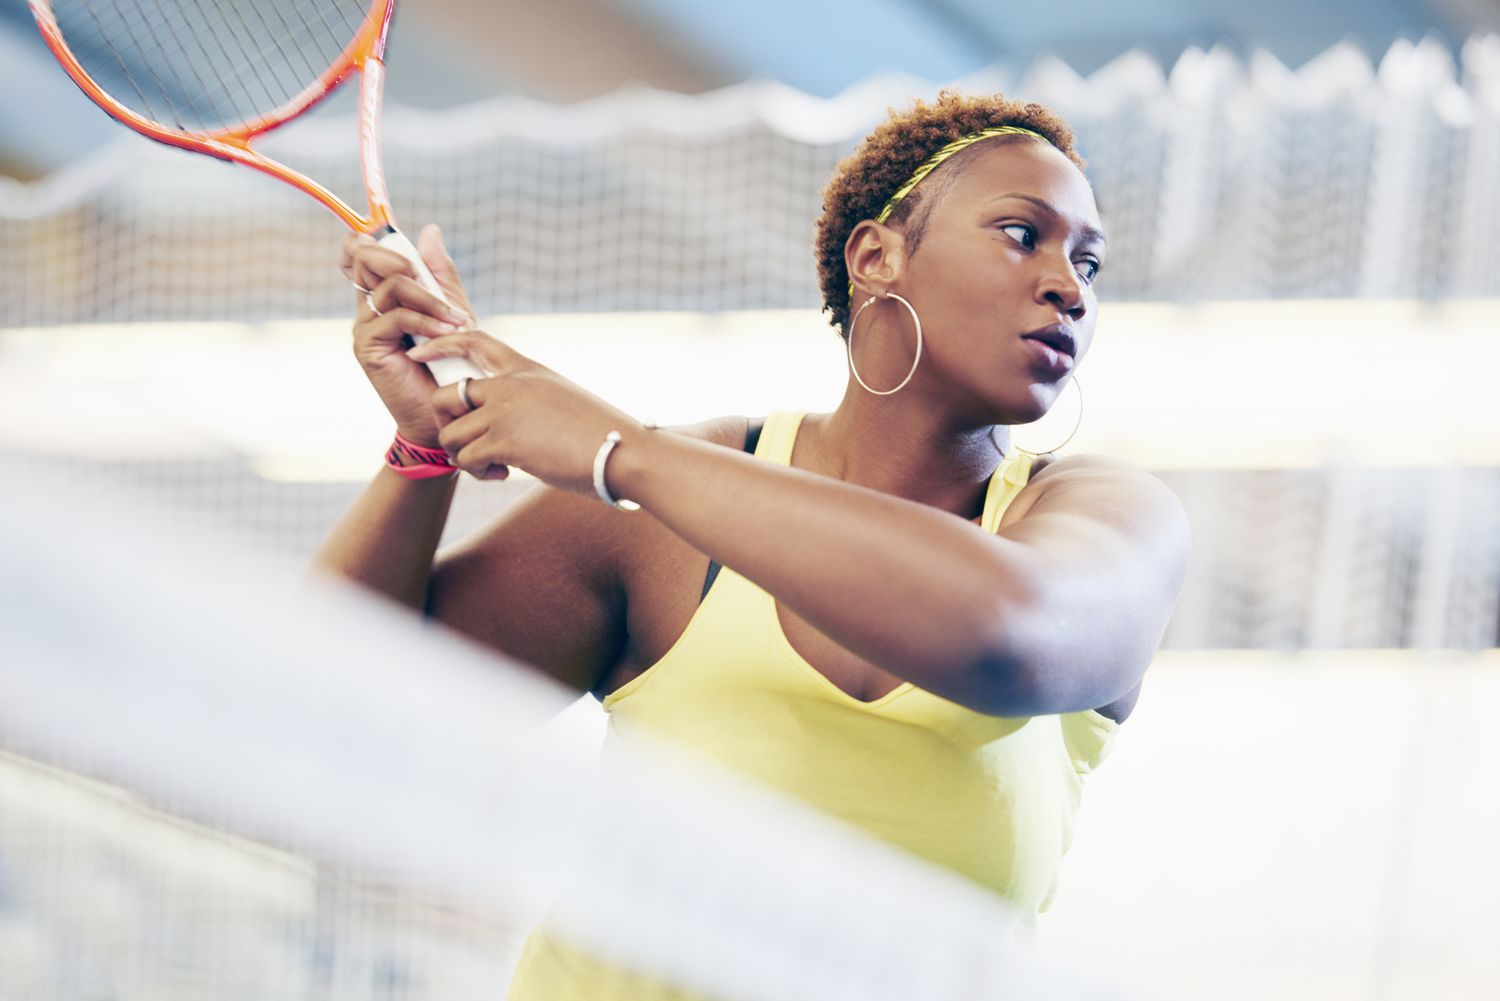 Sports woman on tennis court swinging racket